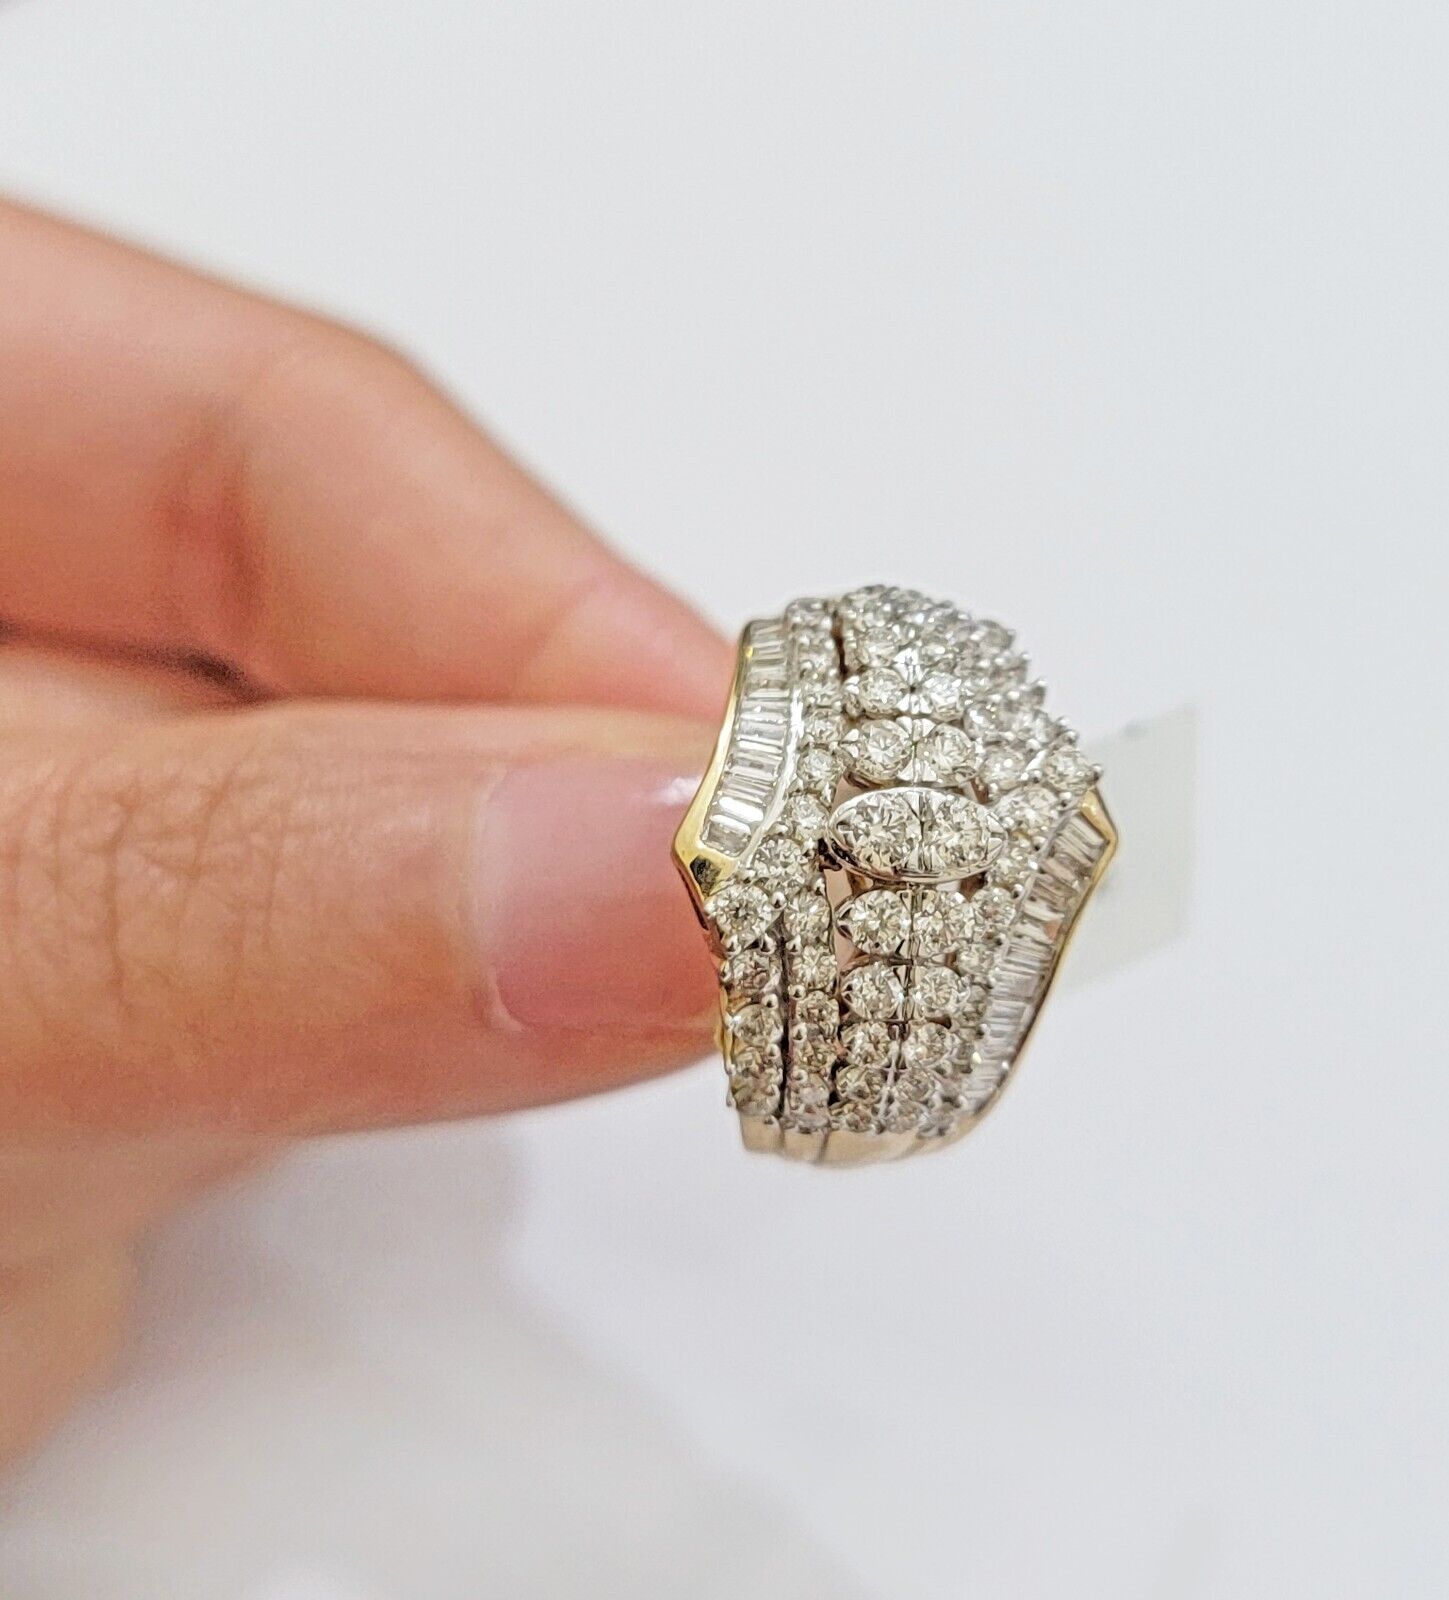 Ladies Diamond Ring Solid 10k Yellow Gold 1.50CT Natural Diamond women band REAL